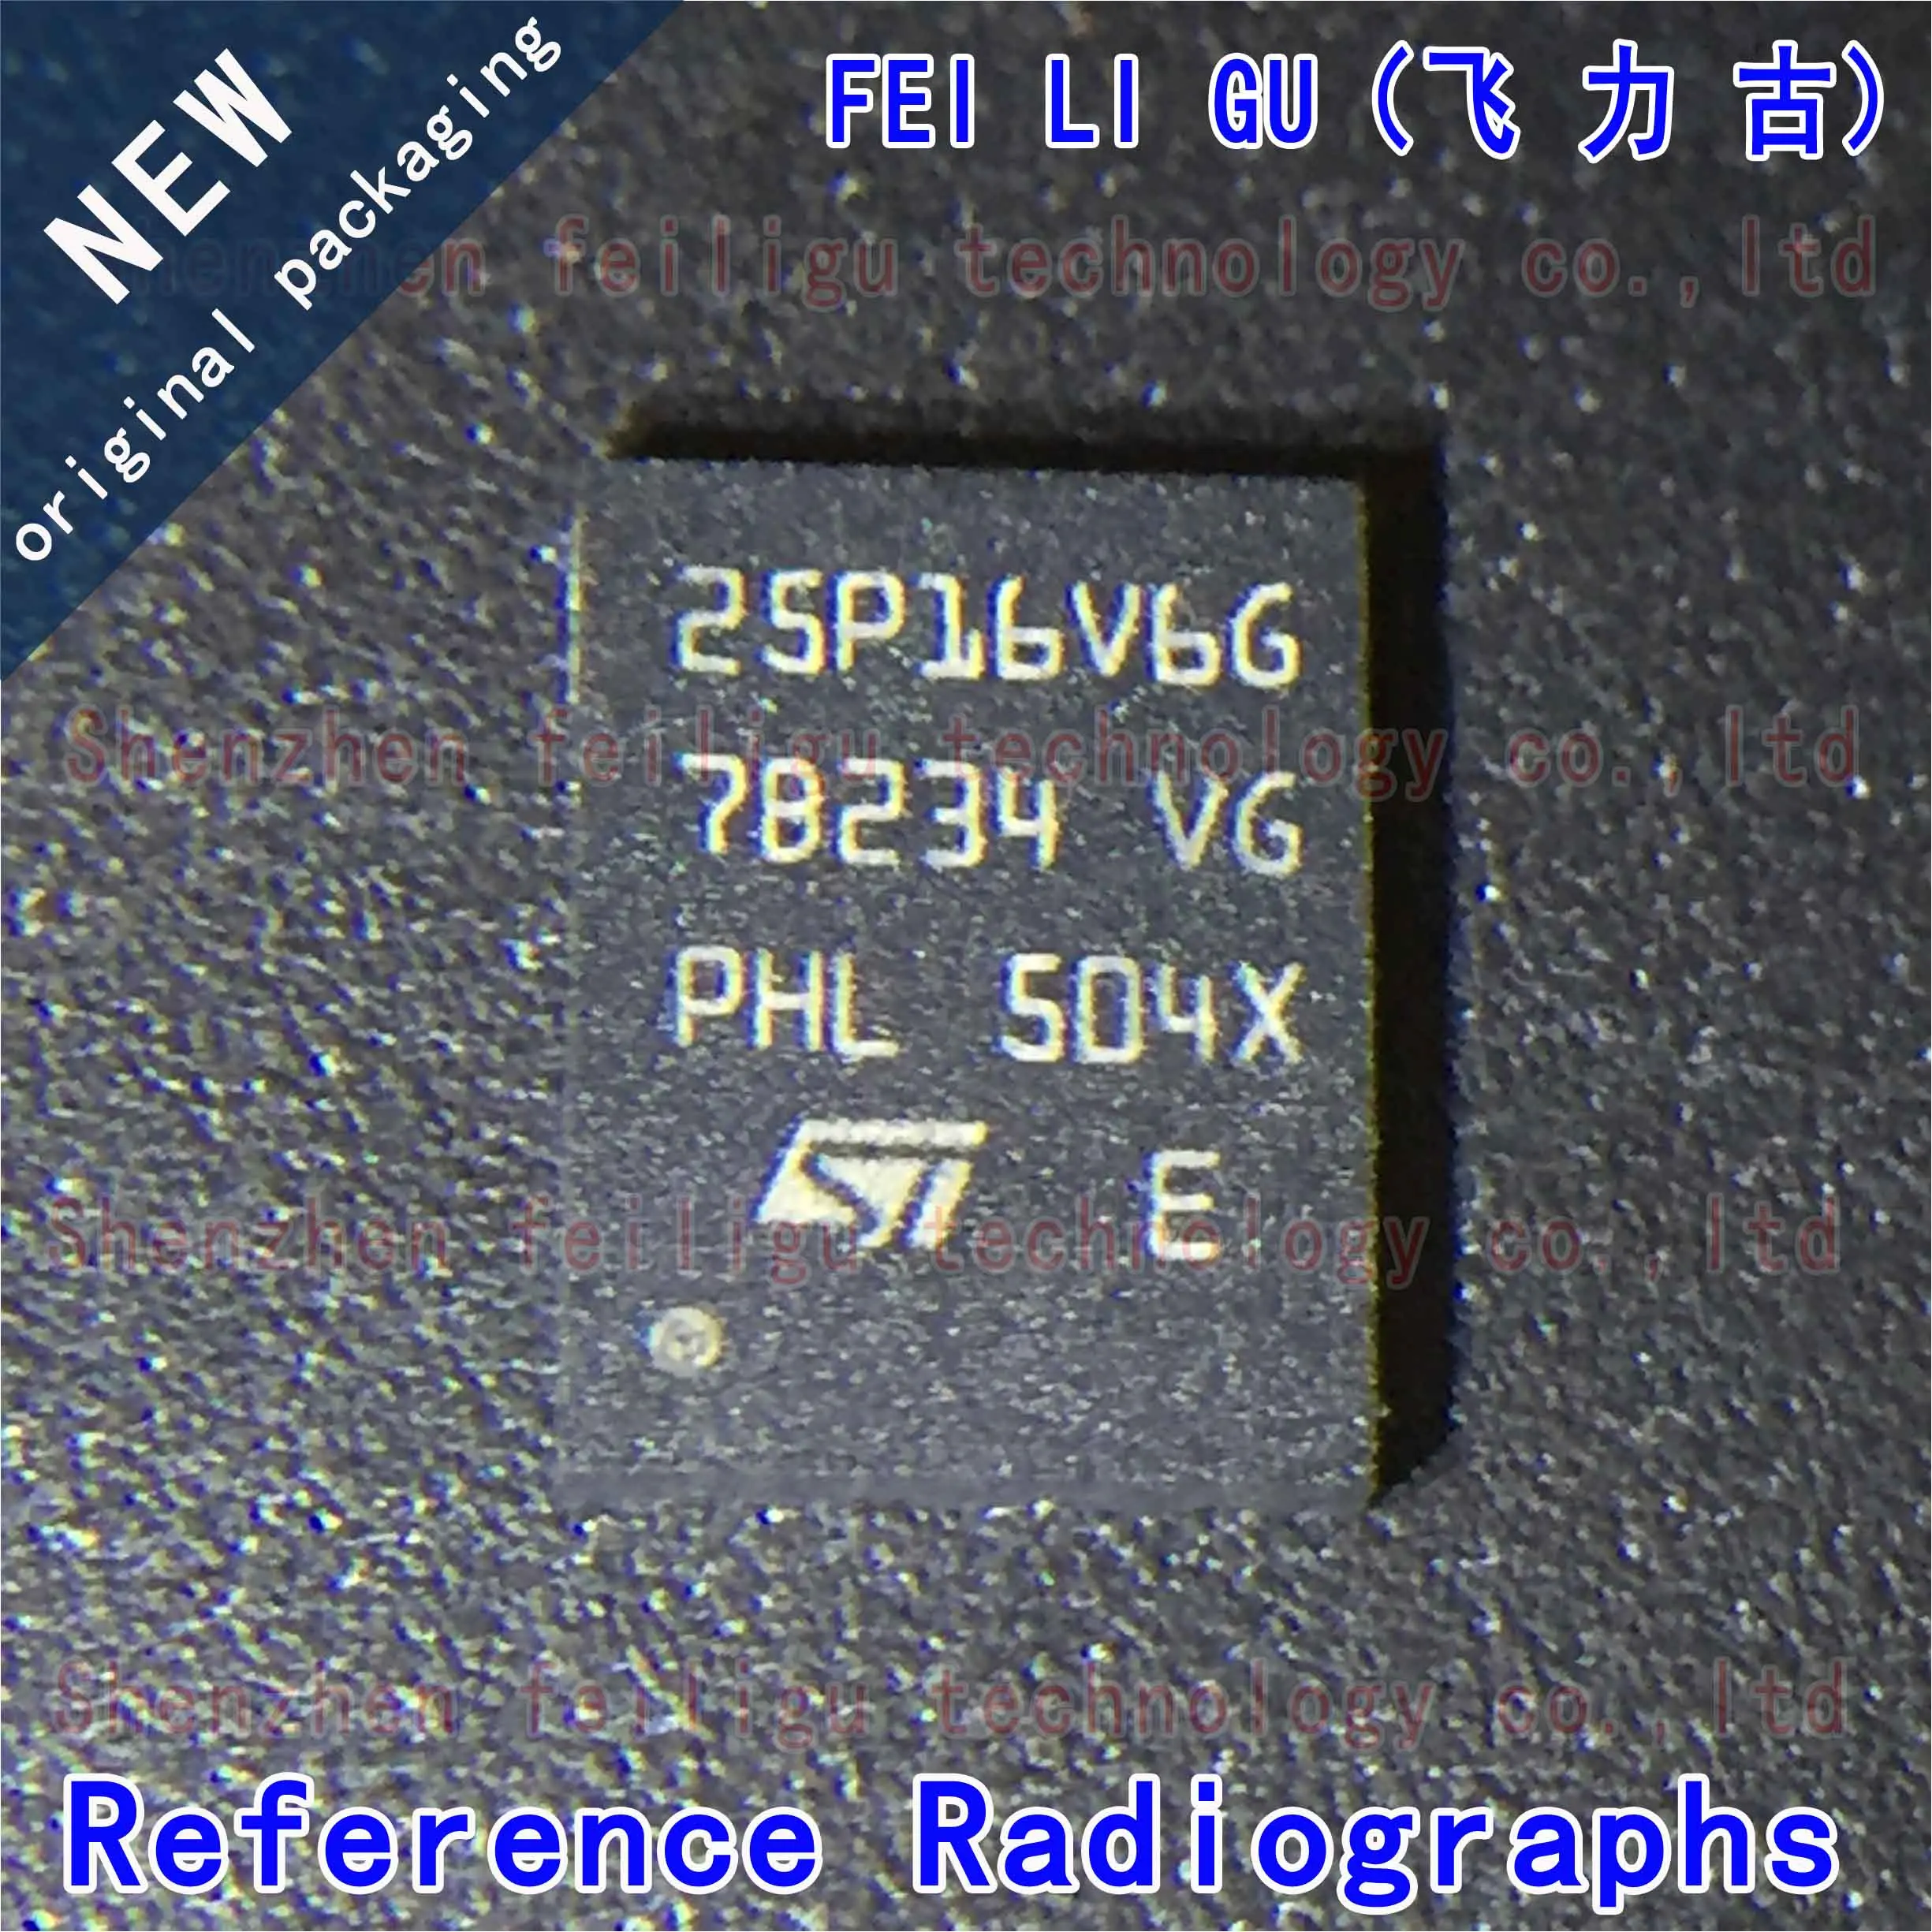 1PCS 100% New original M25P16-VME6TG M25P16-VME6G Silkscreen:25P16V6G Package:VDFPN8 FLASH-NOR 16Mb Memory Chip new m25p64 vmf6tp m25p16 vmn6tp m25p40 vmn6tpb m25p128 vmf6tpb m25p128 vme6tgb serial flash embedded memory chip